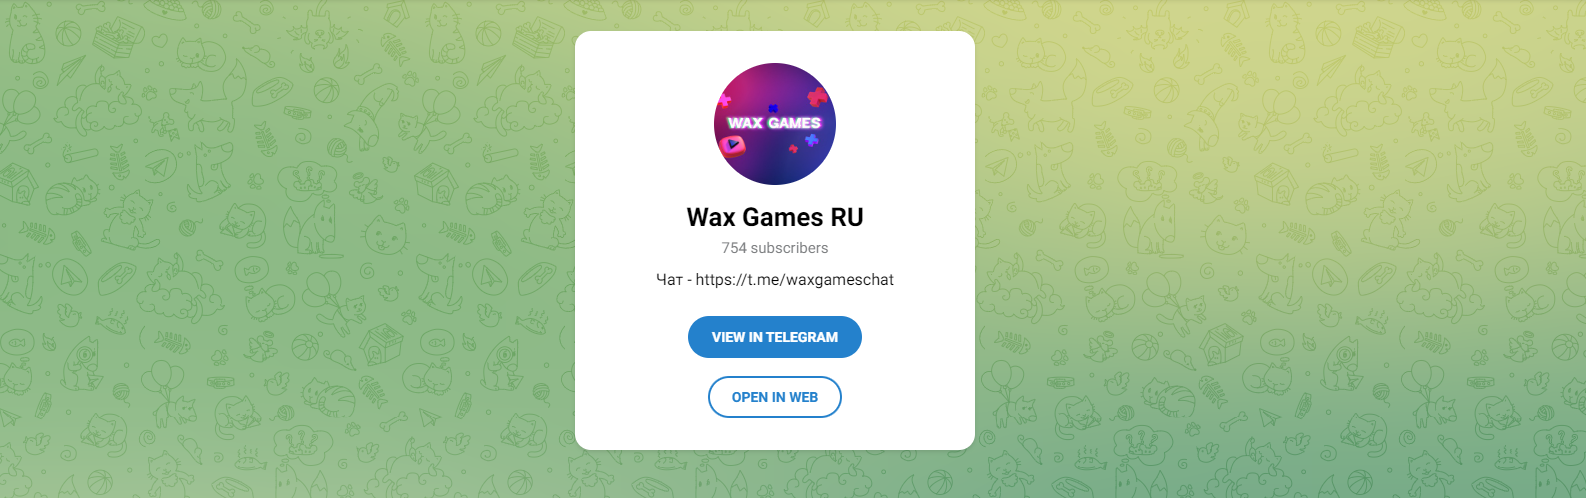 wax games ru